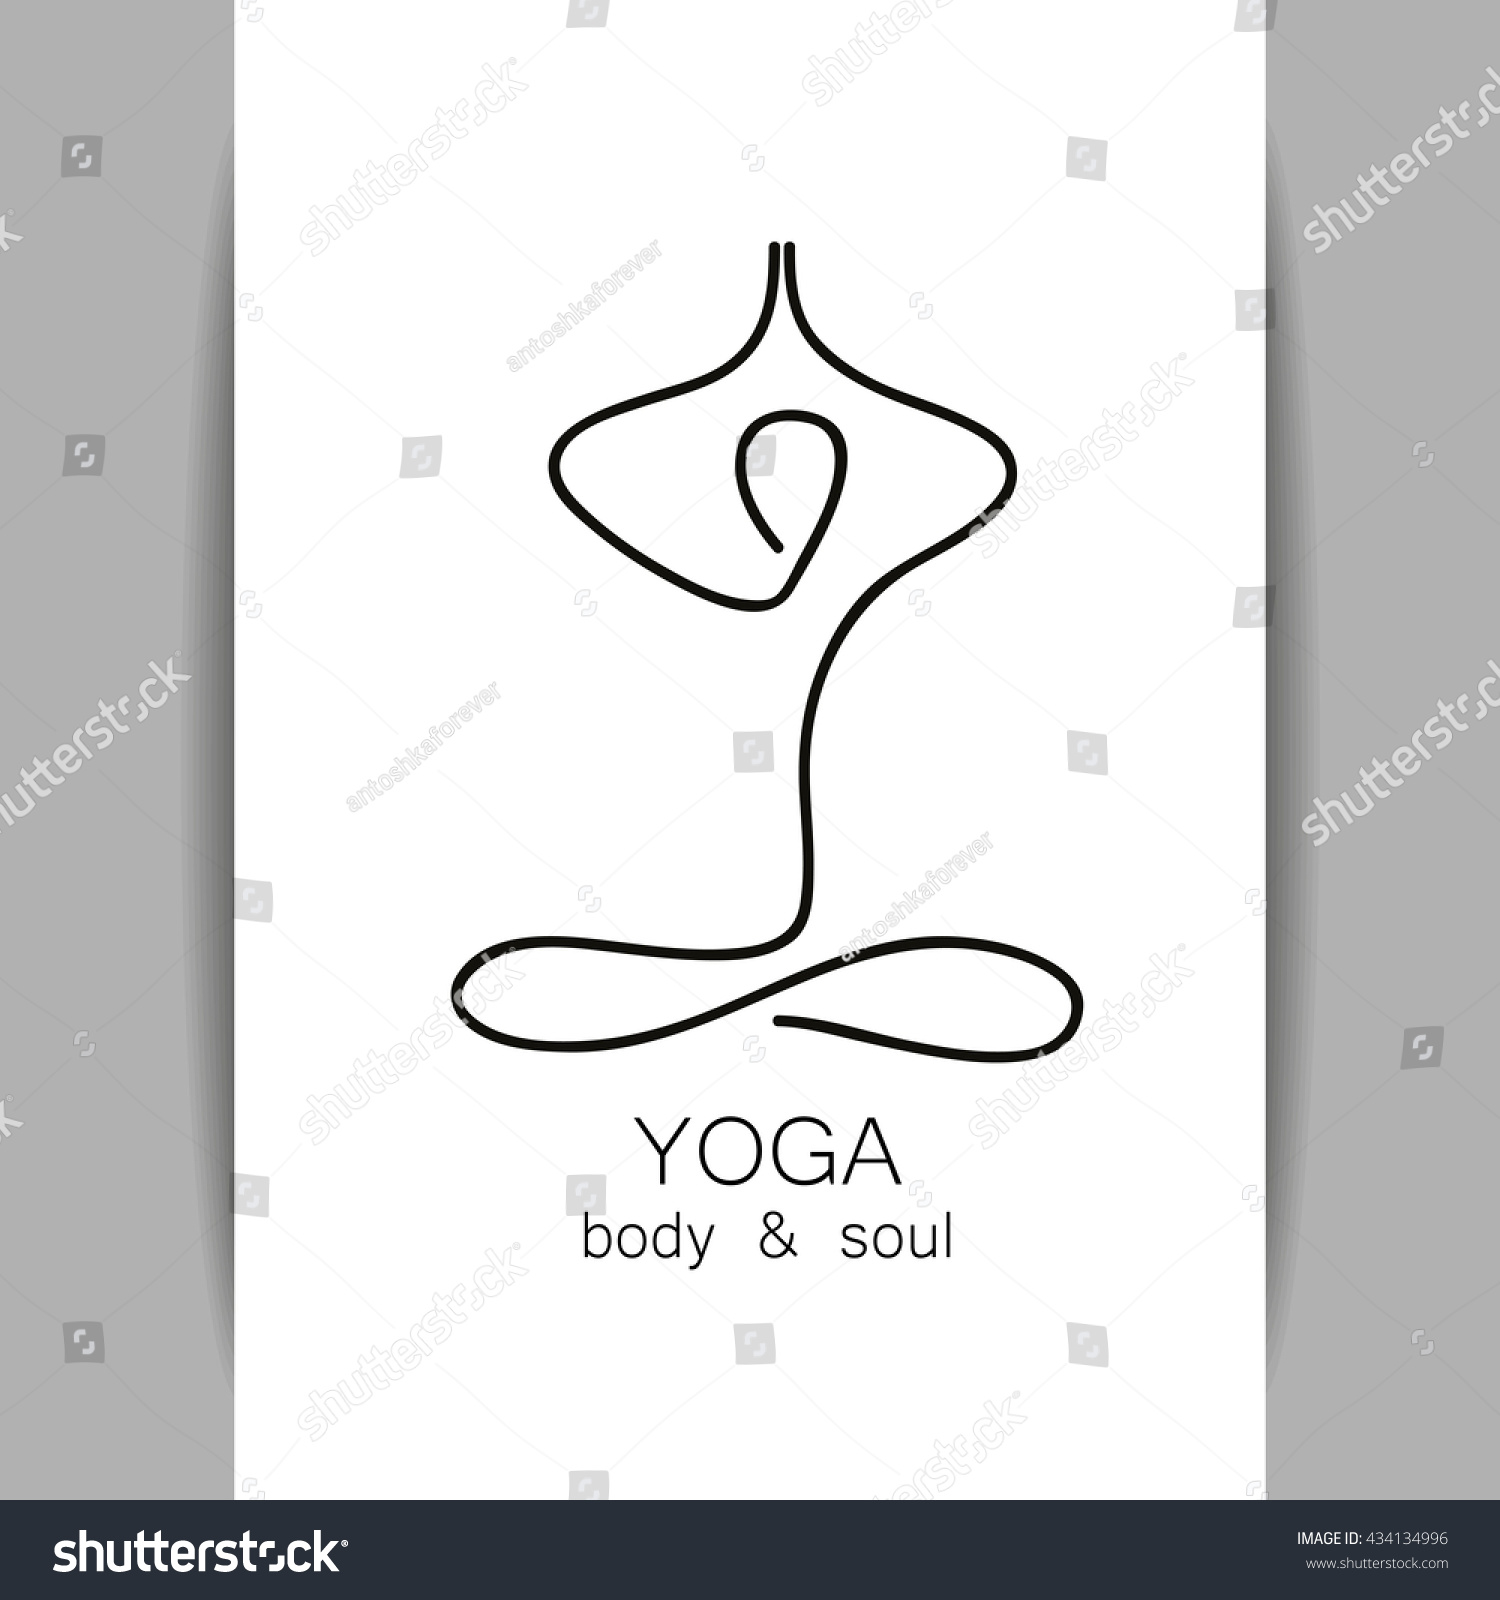 Yoga Logo Design Template Health Care Stok Vektör 434134996 - Shutterstock